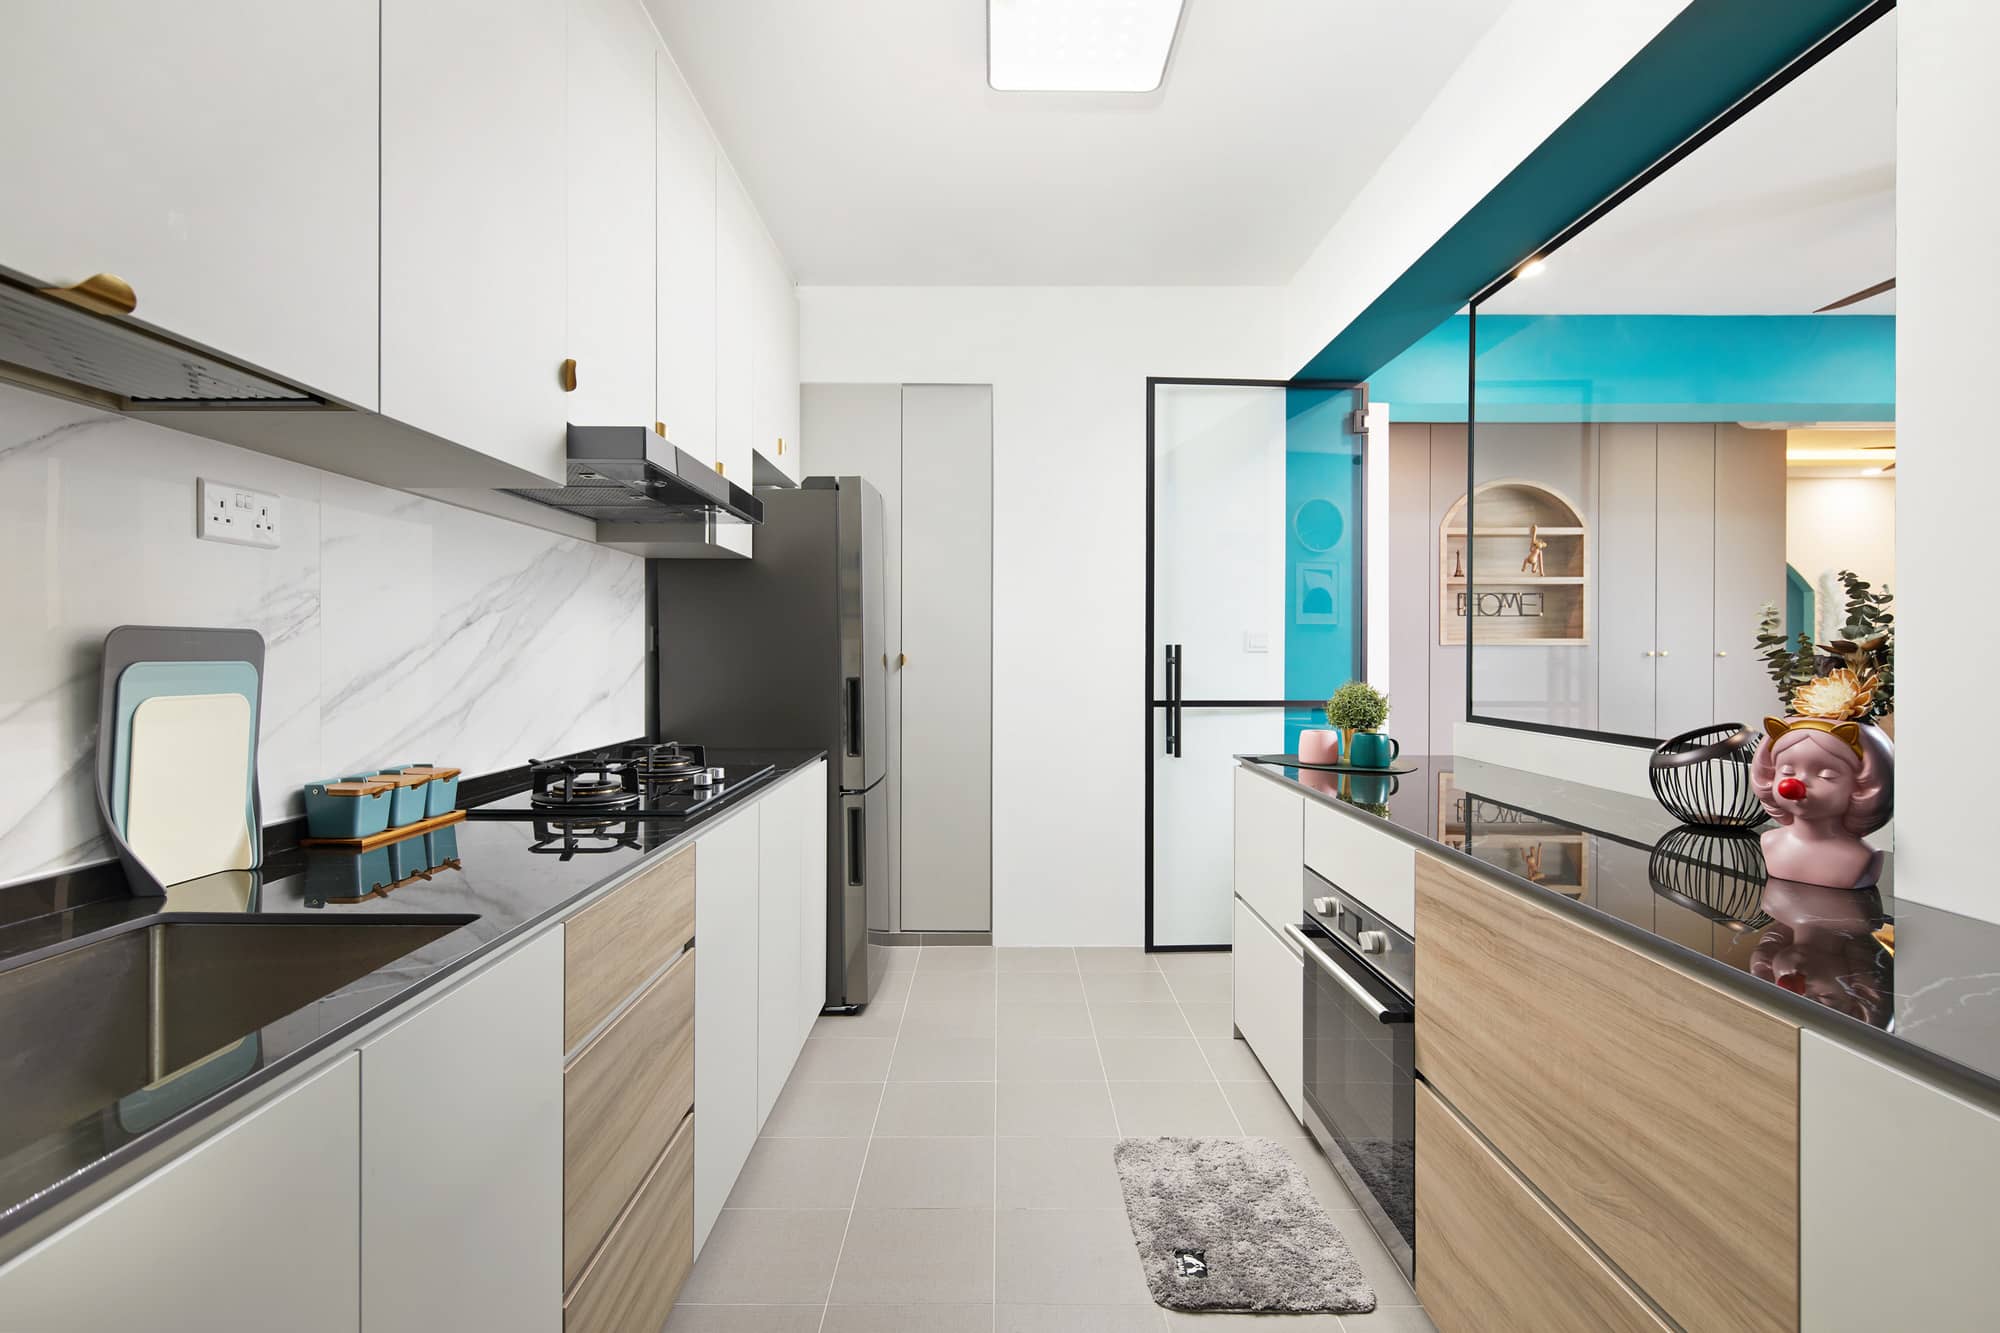 Upcoming 4 Room Bto Launches Interior Design Renovation Ideas Scandinavian Kitchen 